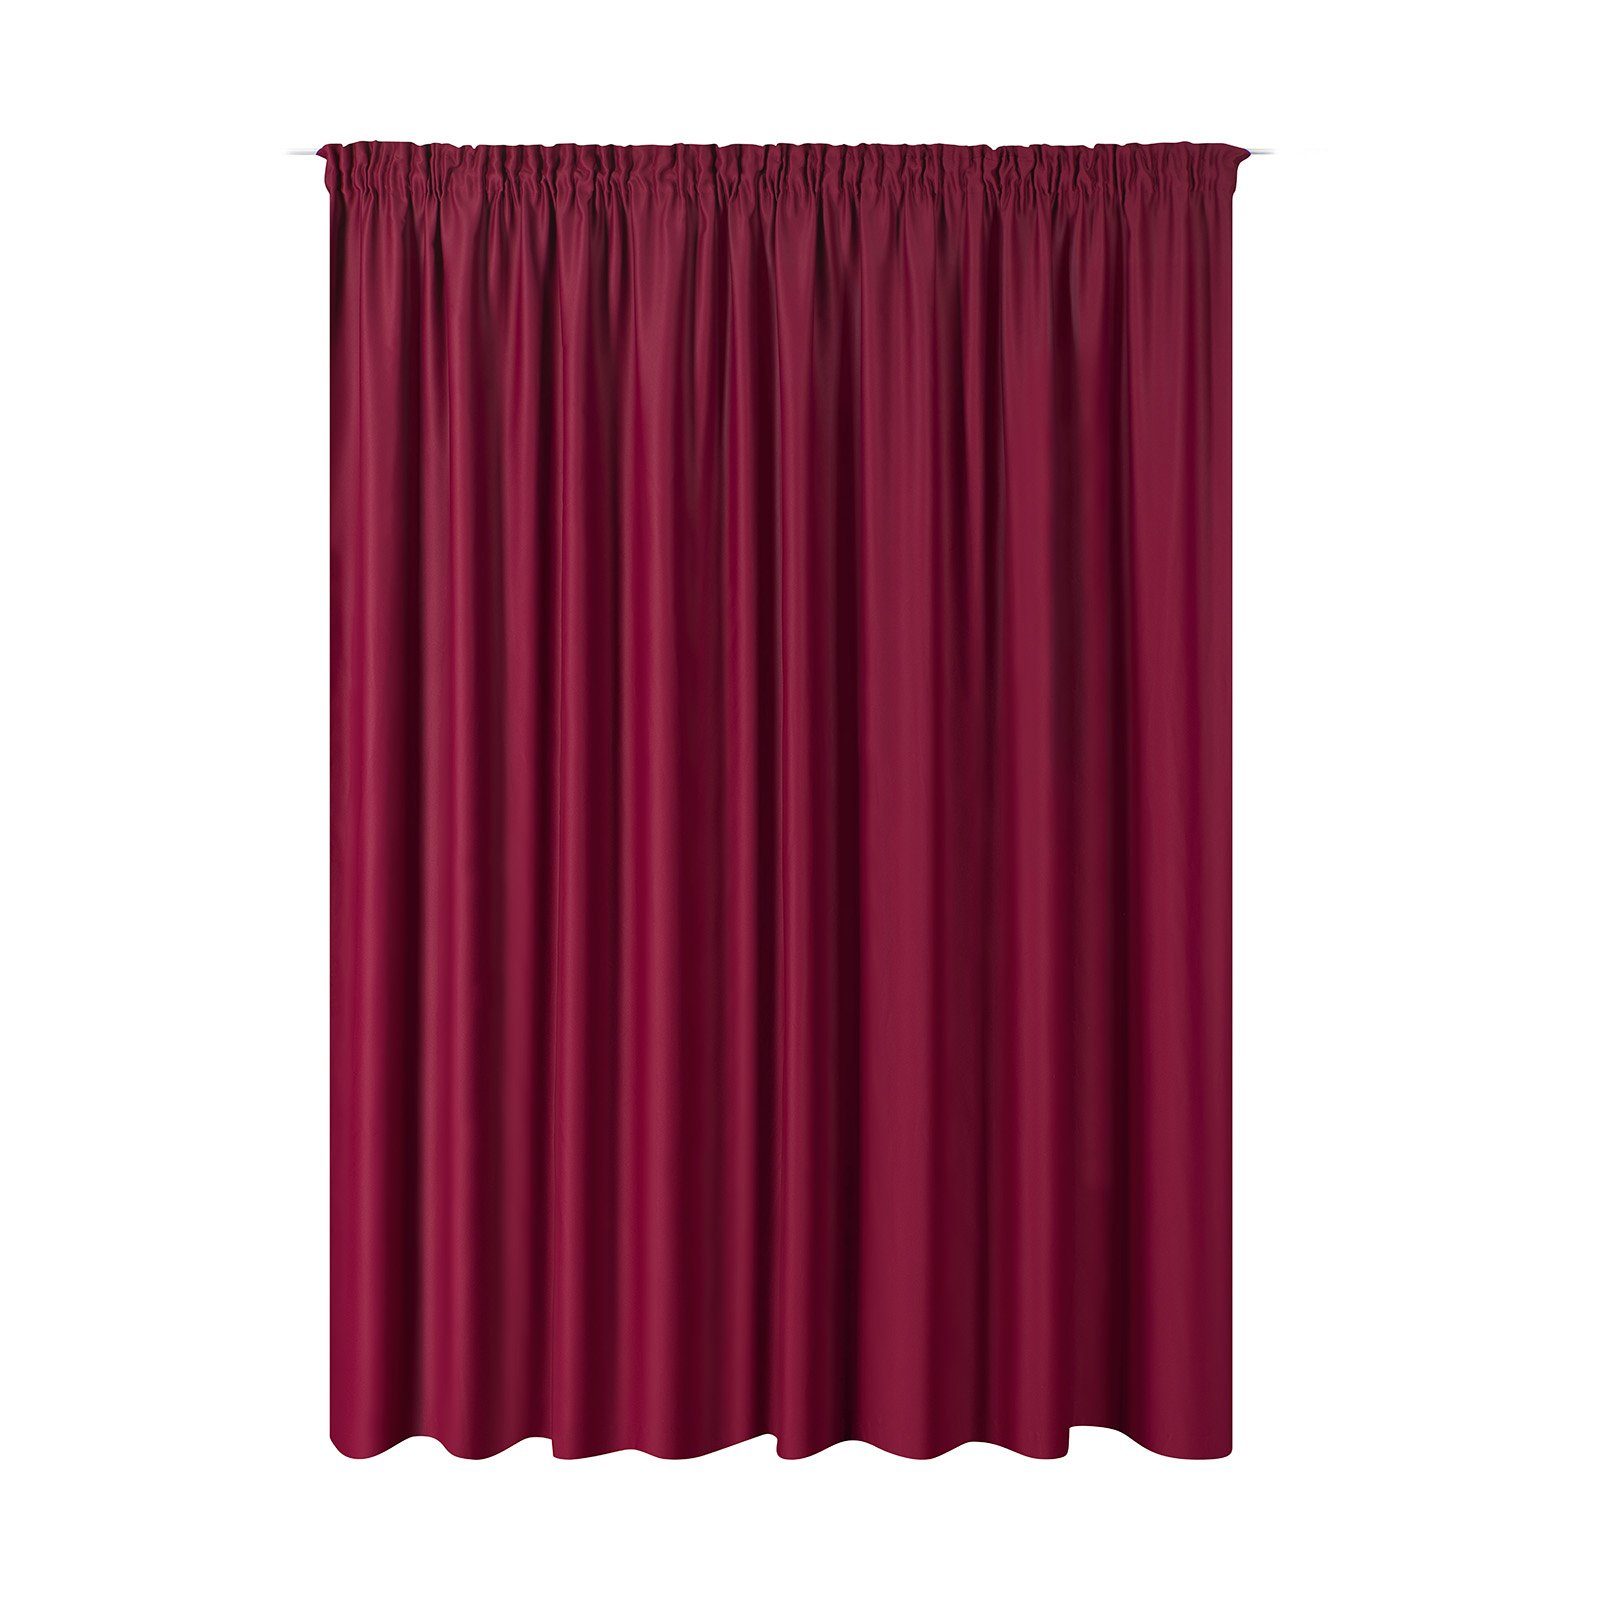 Vorhang Vorhang blickdicht, 300x245cm, Kräuselband, bordeaux, JEMIDI, (1 St)